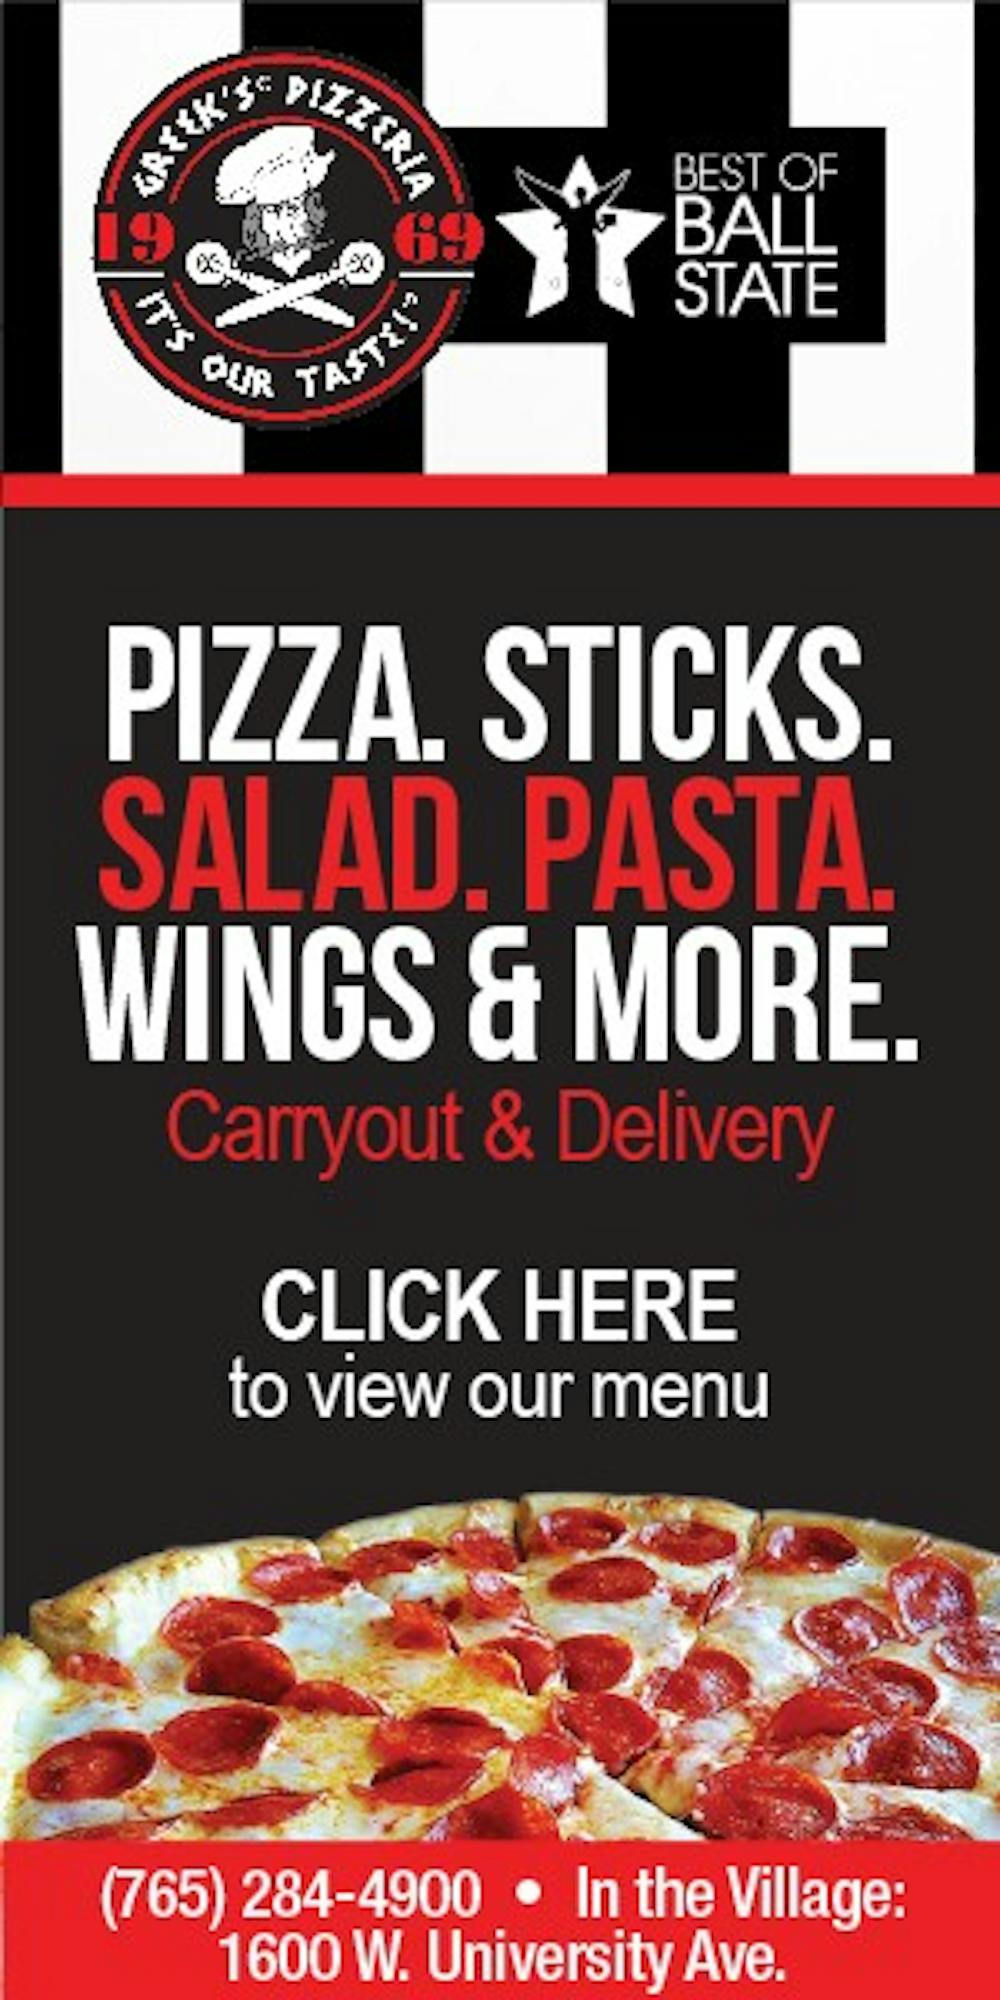 Greeks Pizza Online Ad.jpeg